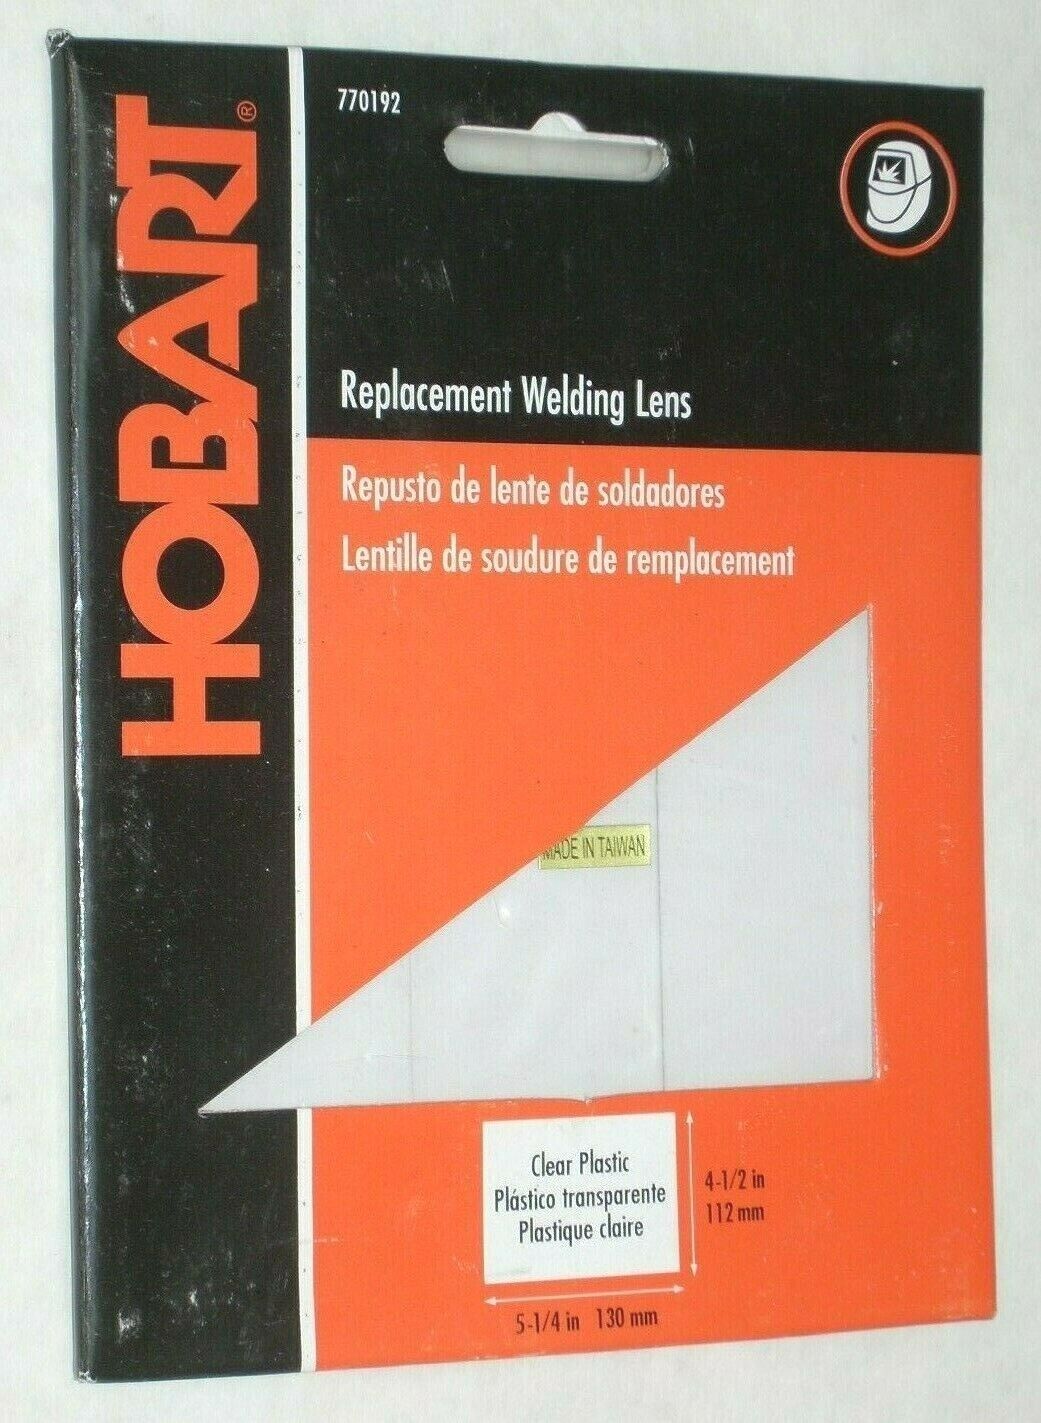 Hobart 770192 Welding Helmet Clear Cover Lens Replacement 4 1/2 X 5 1/4 Plastic